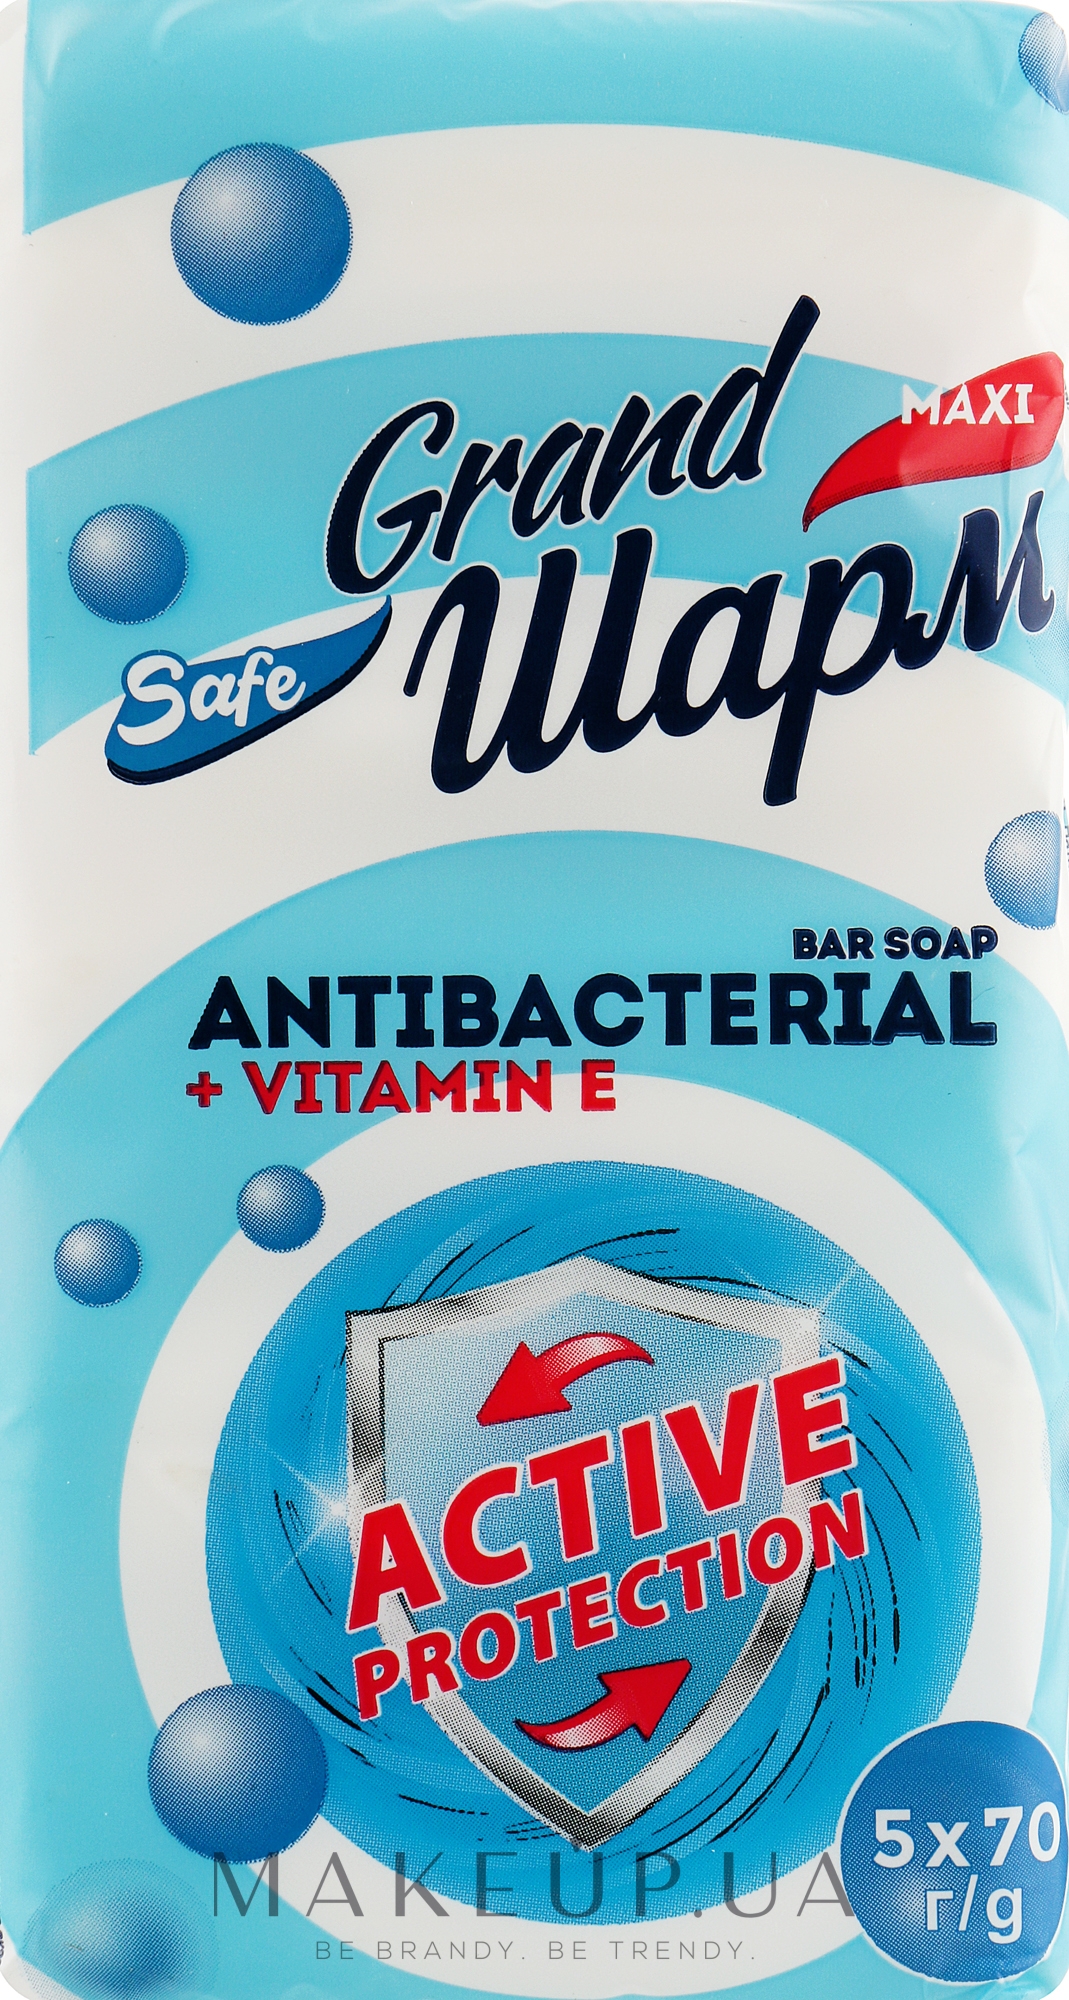 Мыло туалетное "Антибактериальное + Витамин E" - Grand Шарм Antibacterial + Vitamin E — фото 5x70g